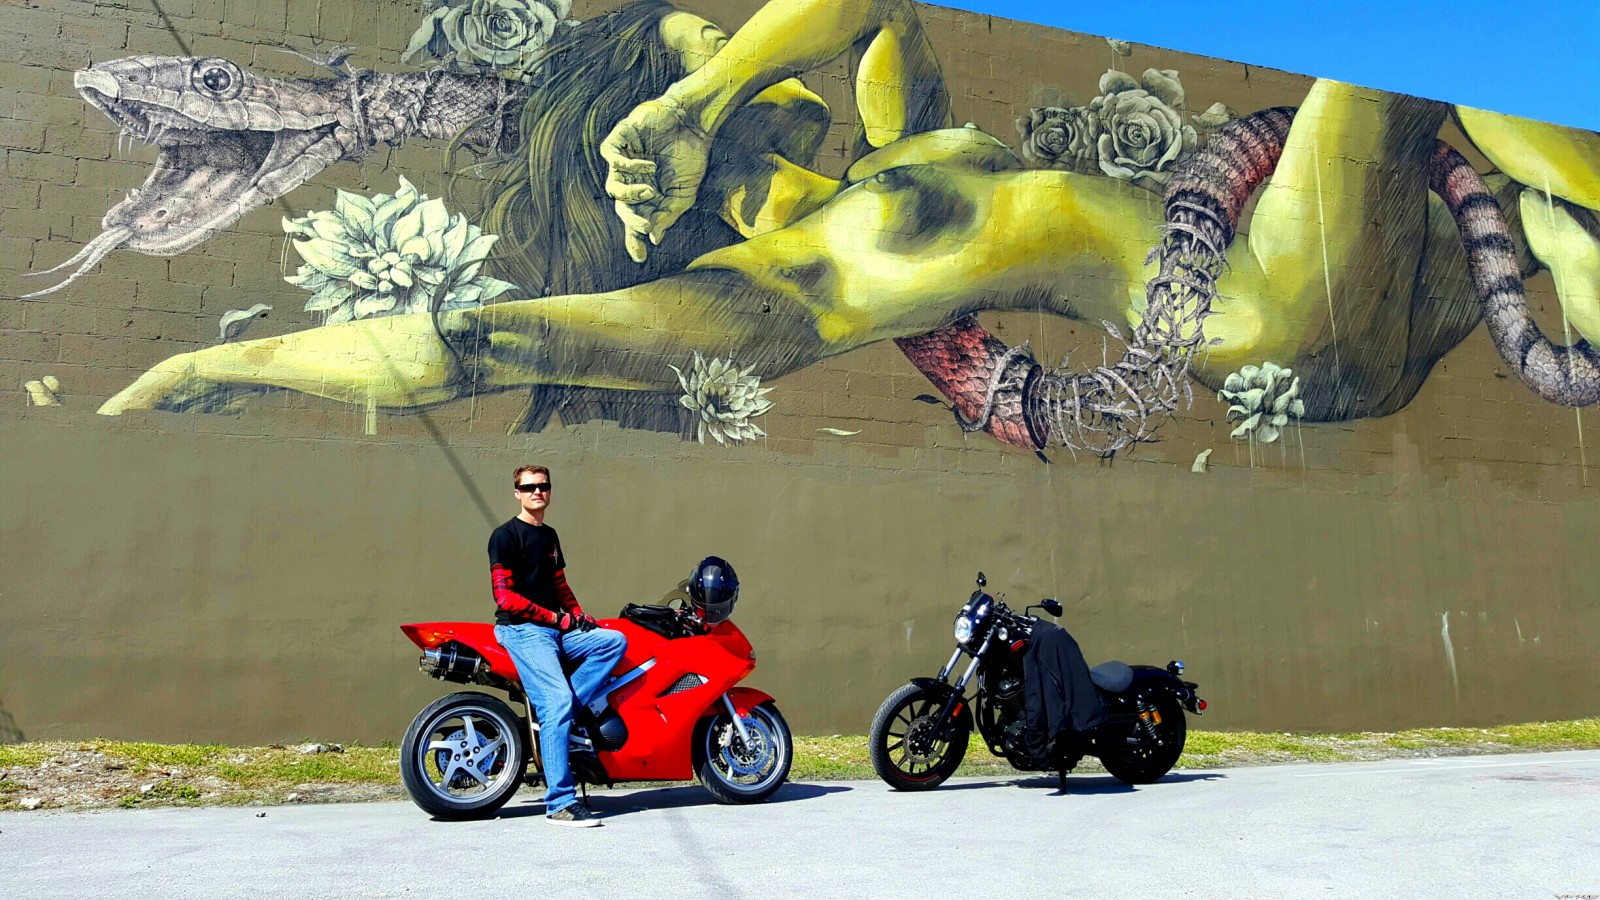 Honda VFR Wynwood Walls snake girl graffiti   Copy